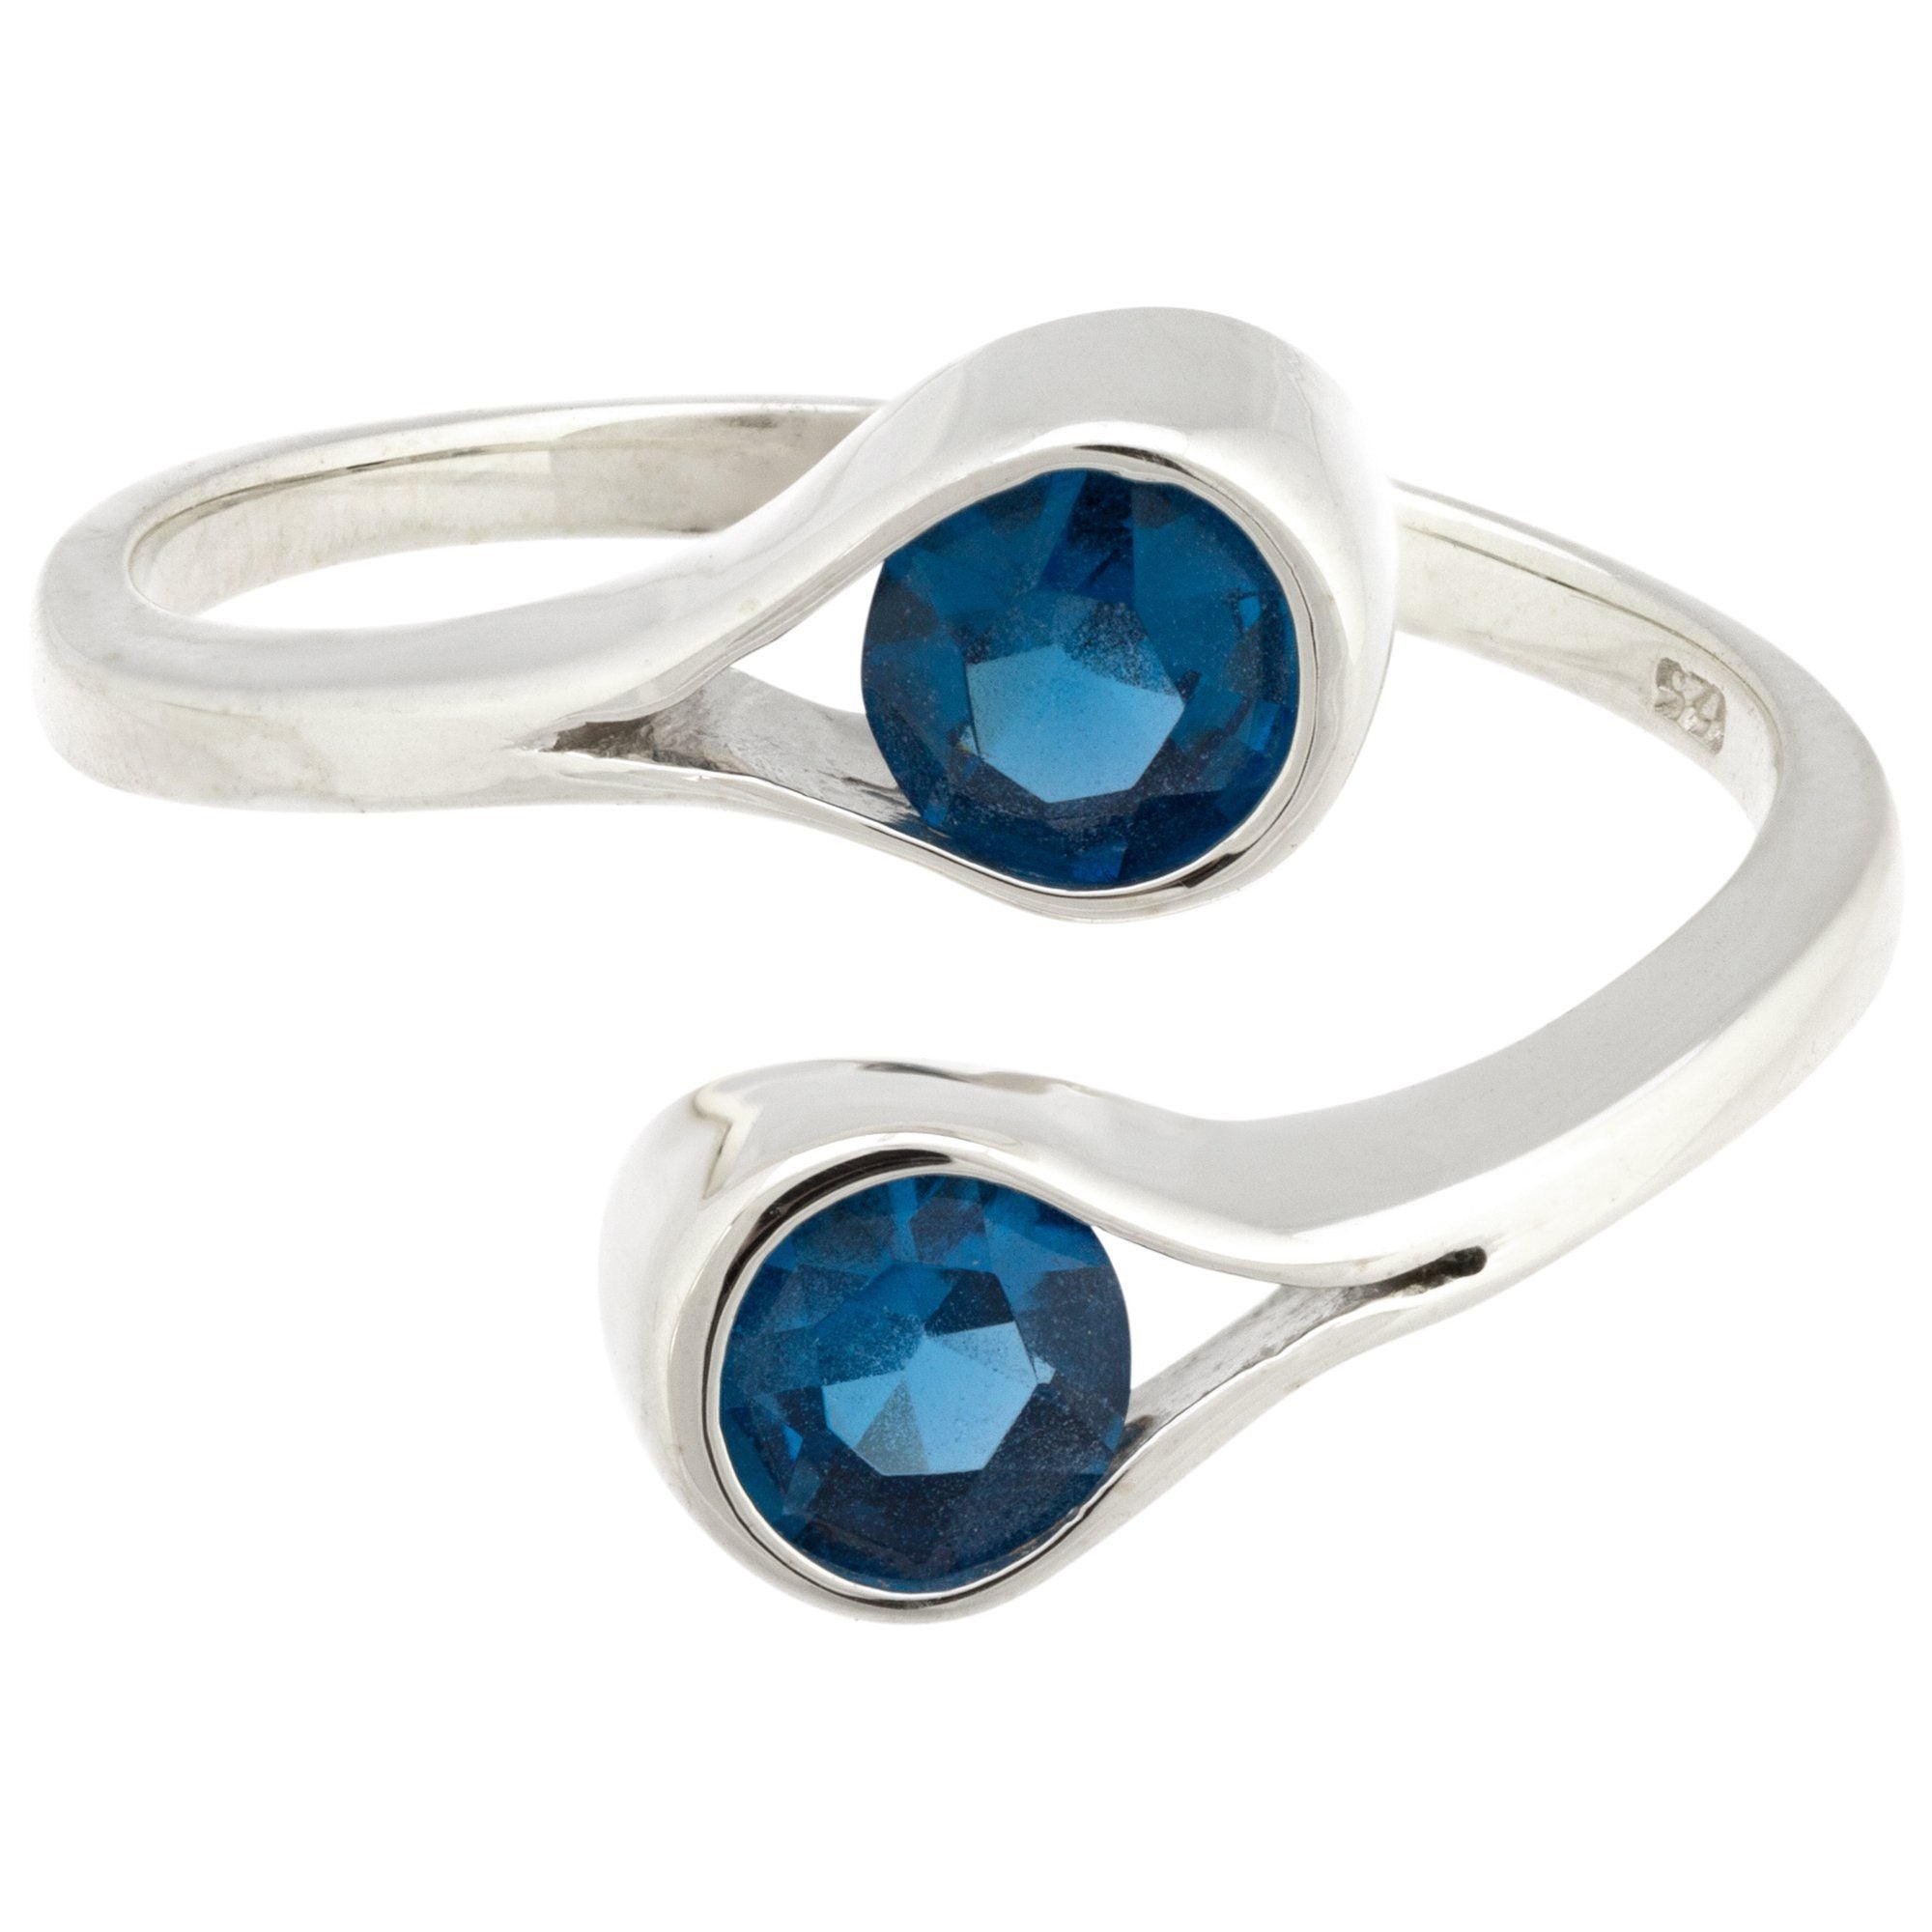 Double Drop Sterling & Gemstone Wrap Ring - Blue Topaz - 10